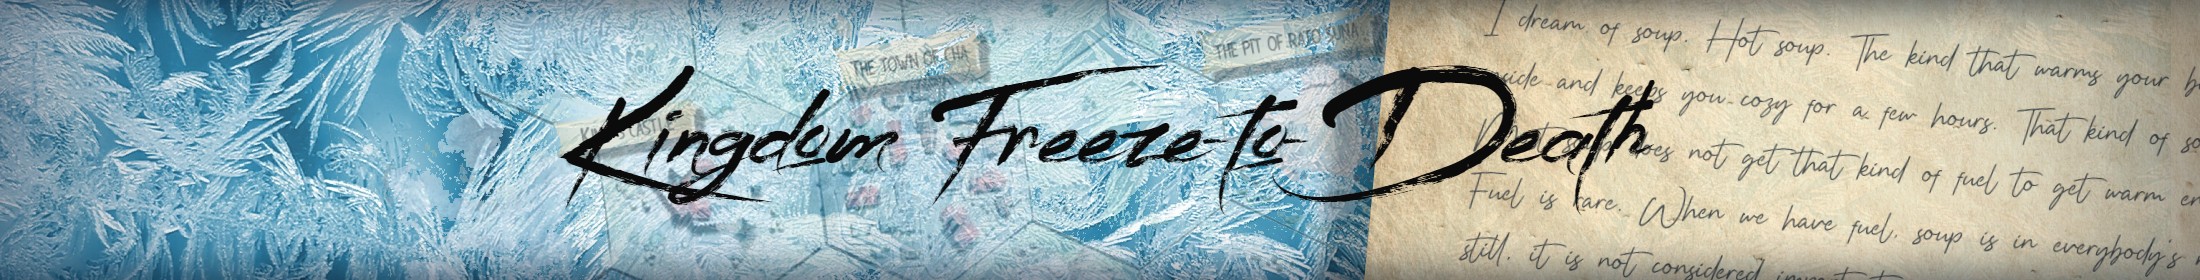 Kingdom Freeze-to-Death